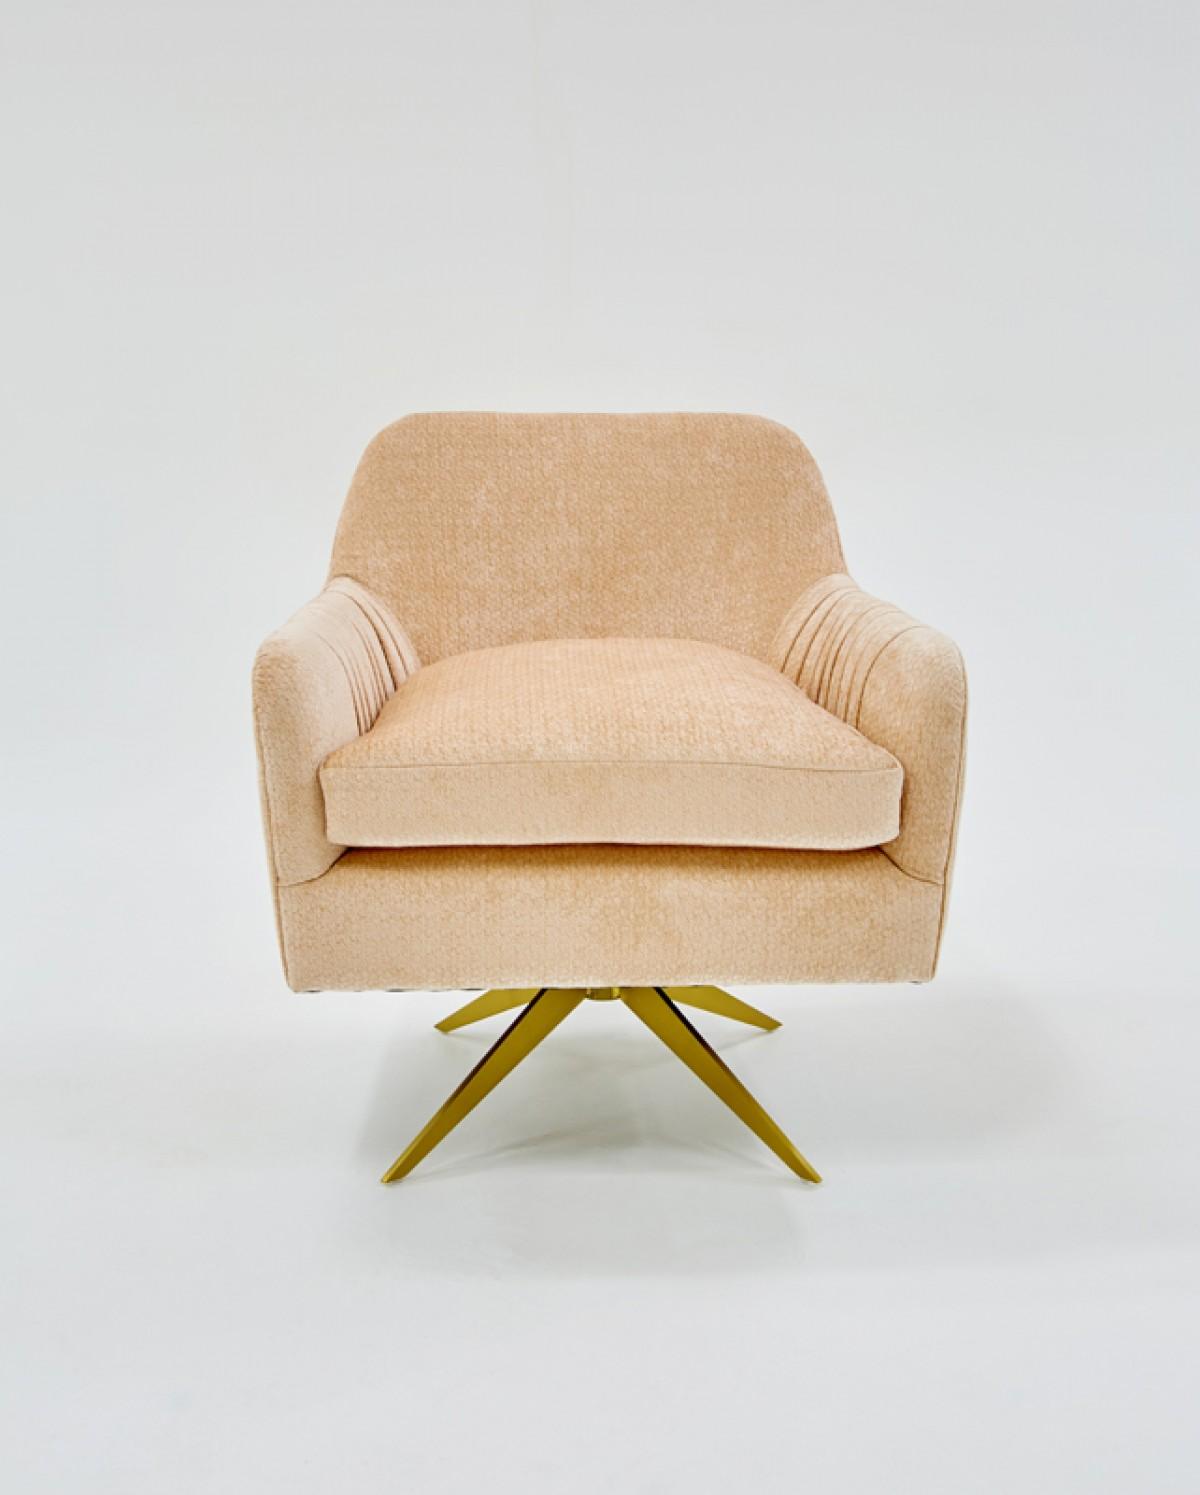 Contemporary, Modern Accent Chair Divani Casa Abigail VGHKF3054-50-PNK in Pink, Peach, Gold Fabric